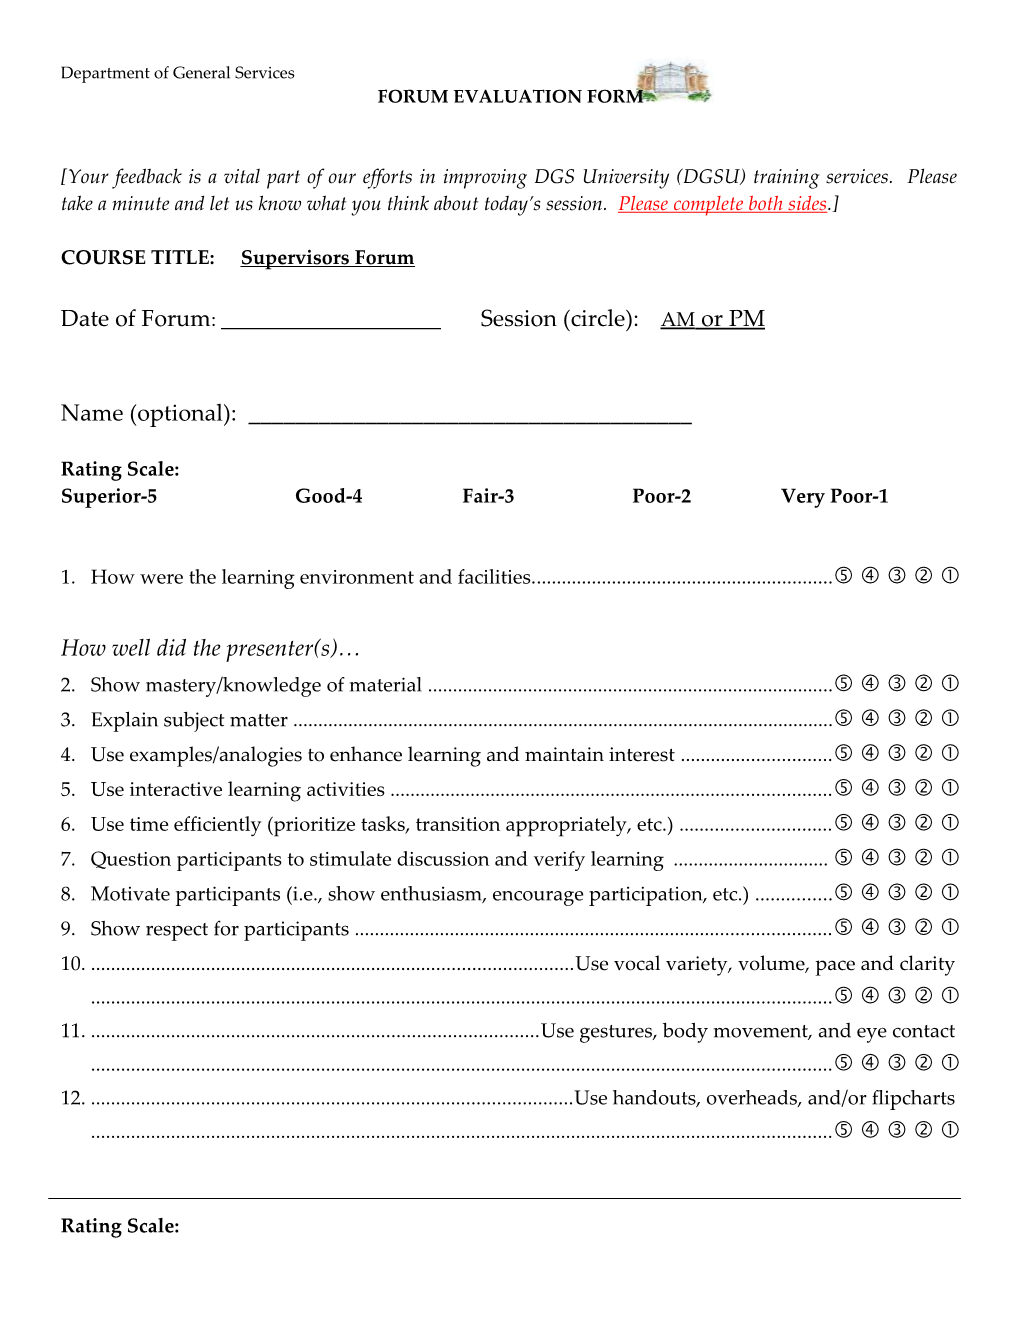 Forum Evaluation Form